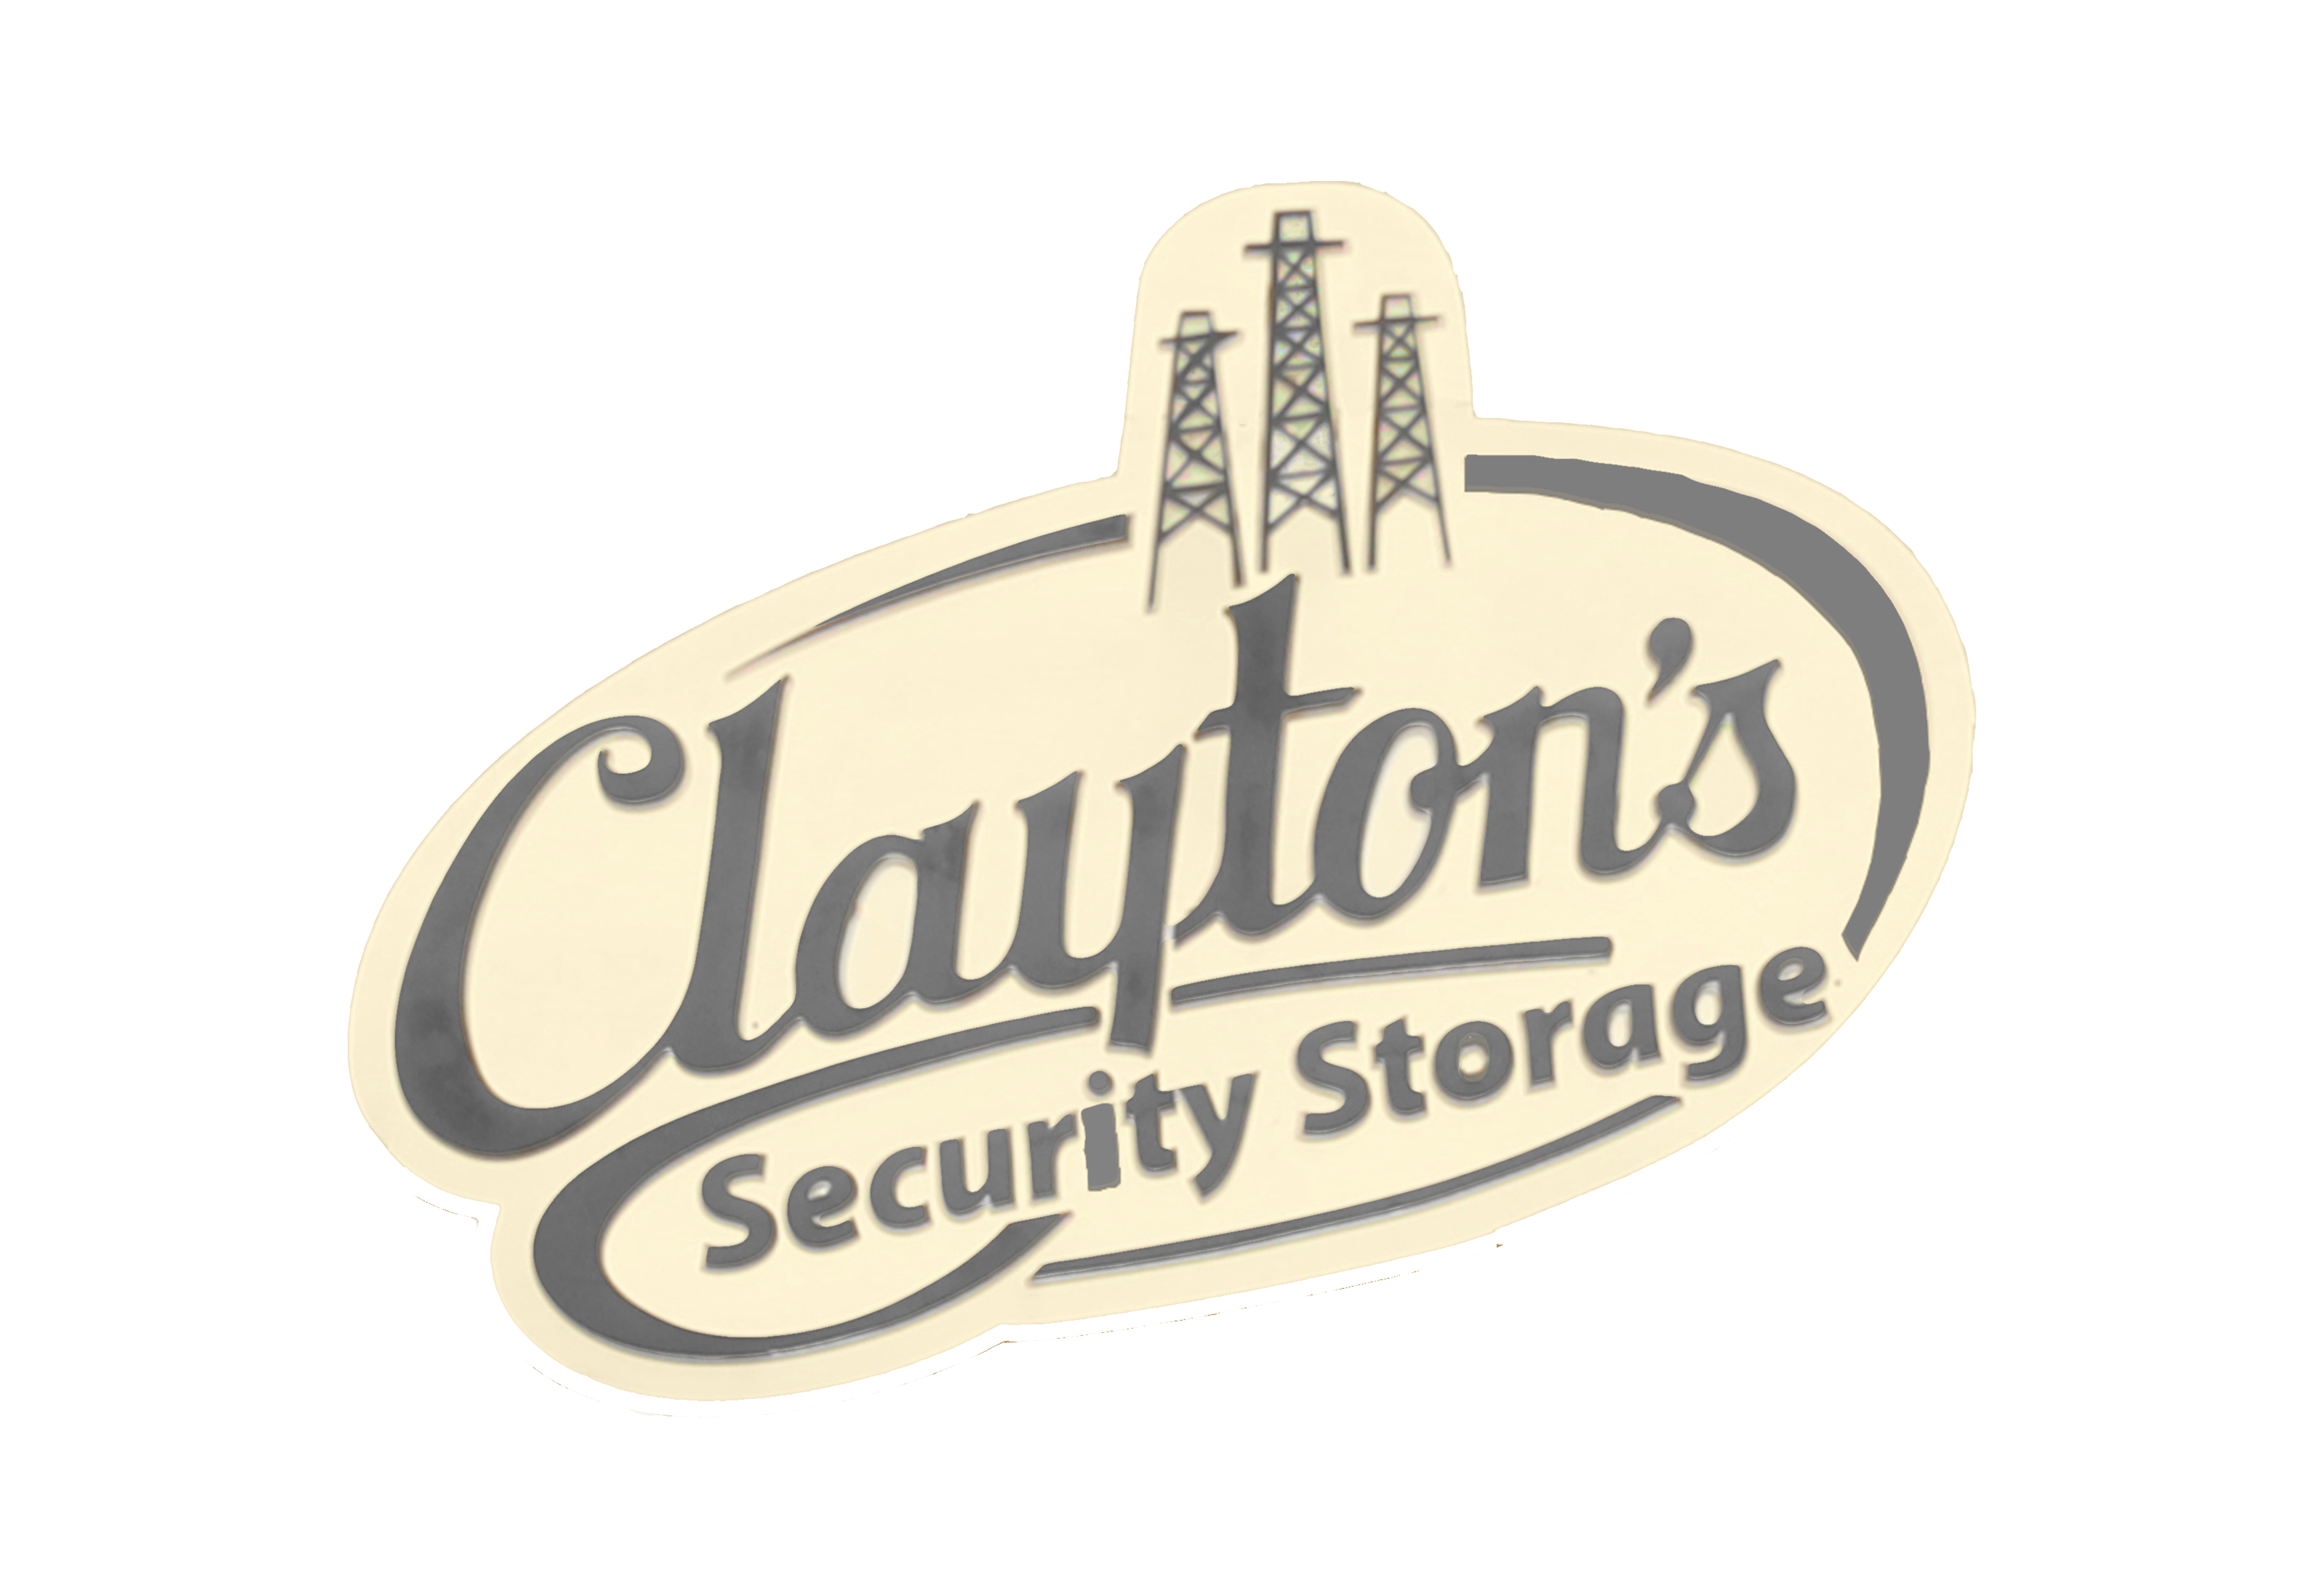 Claytons self storage